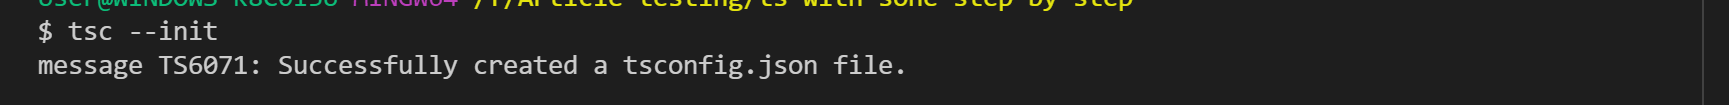 Generating tsconfig.json file